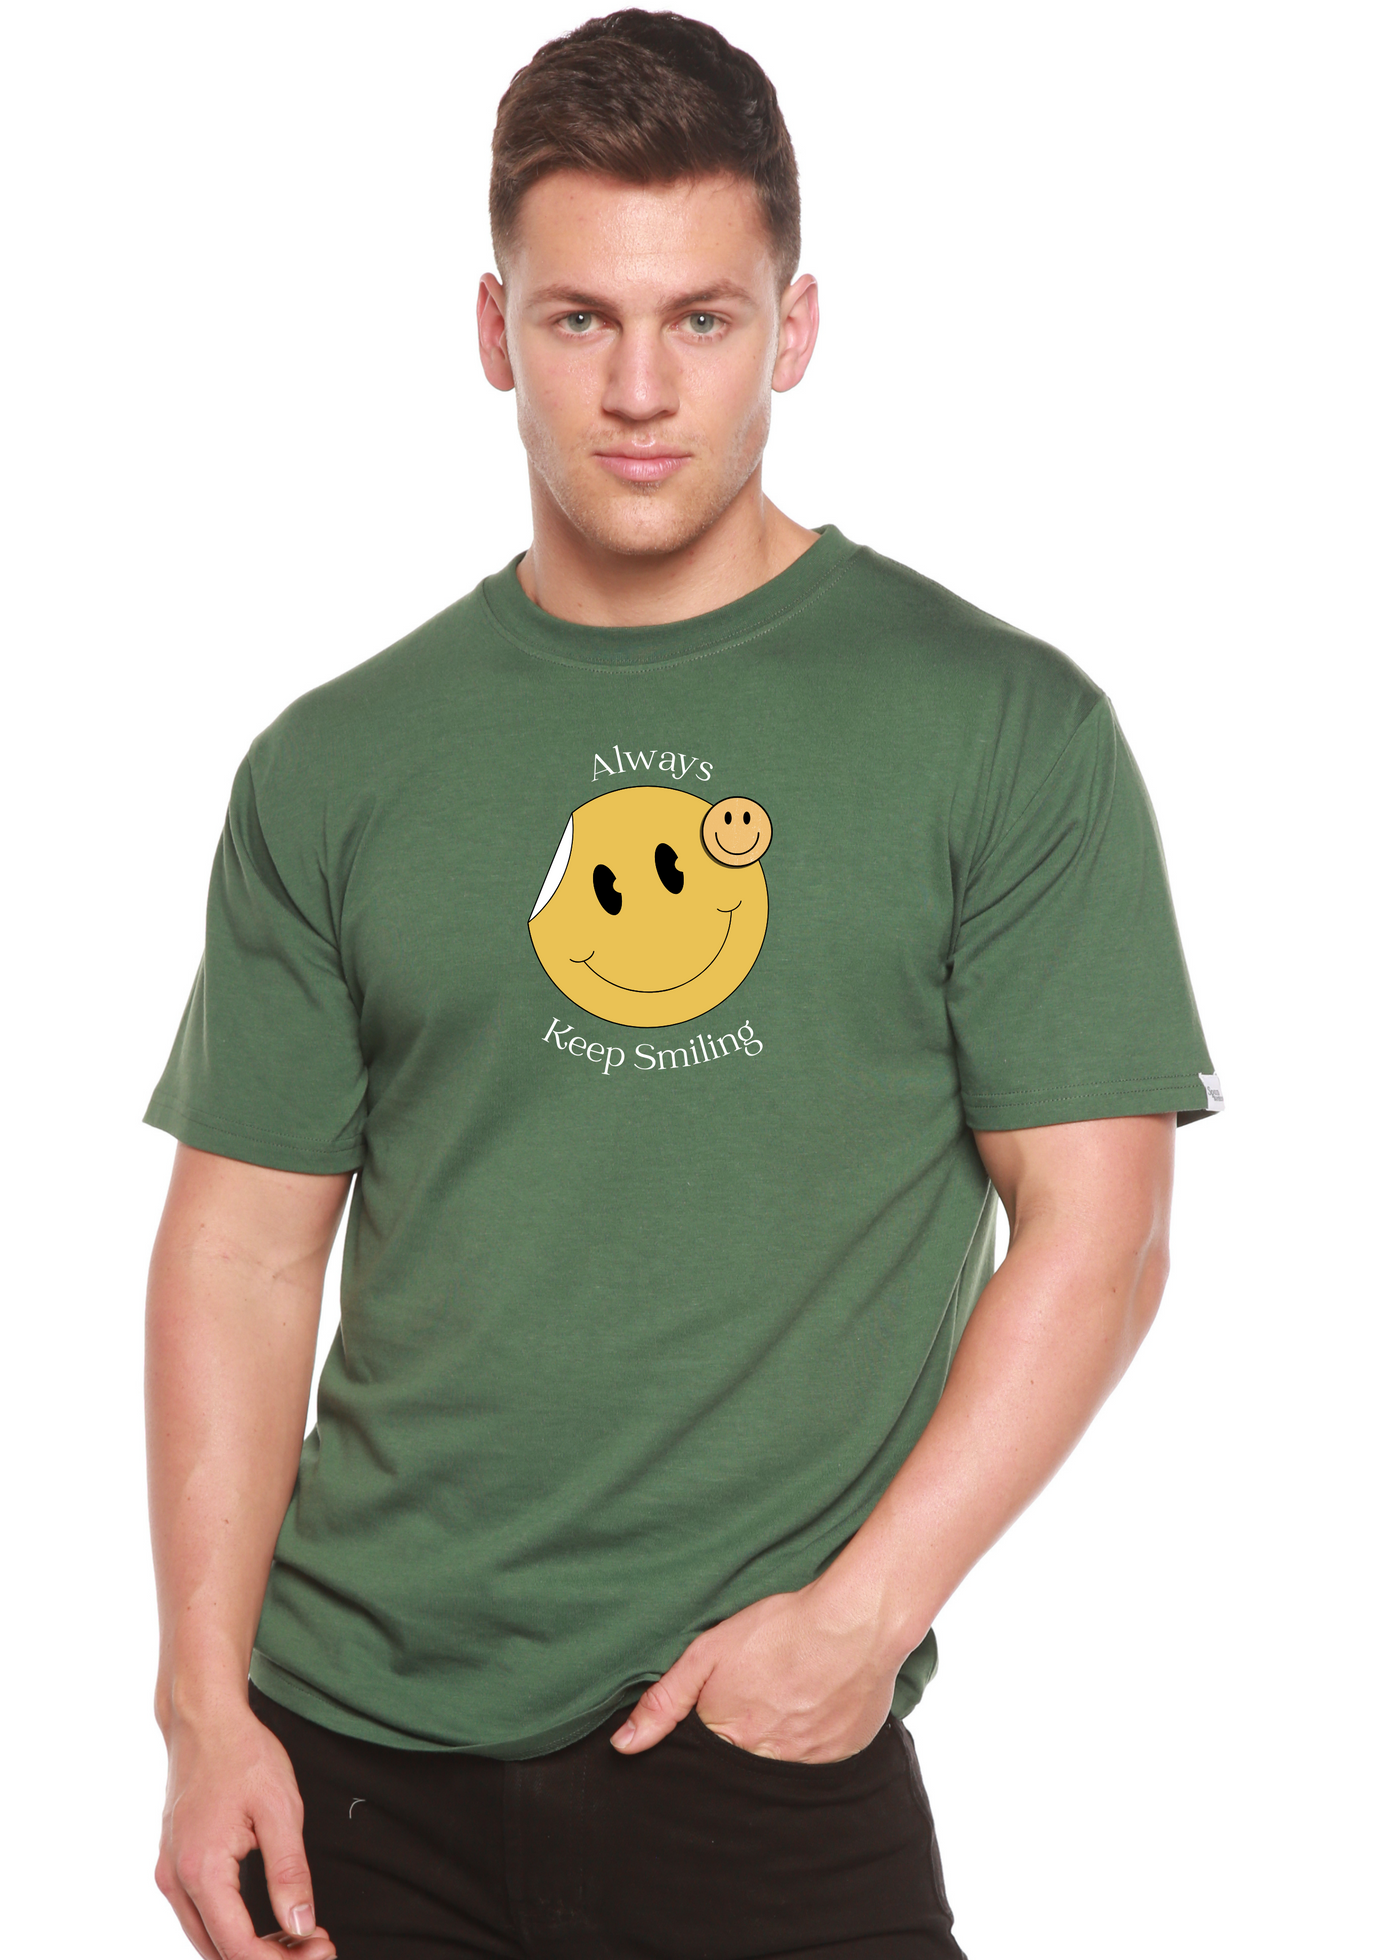 Always Keep Smiling Graphic Bamboo T-Shirt green tea